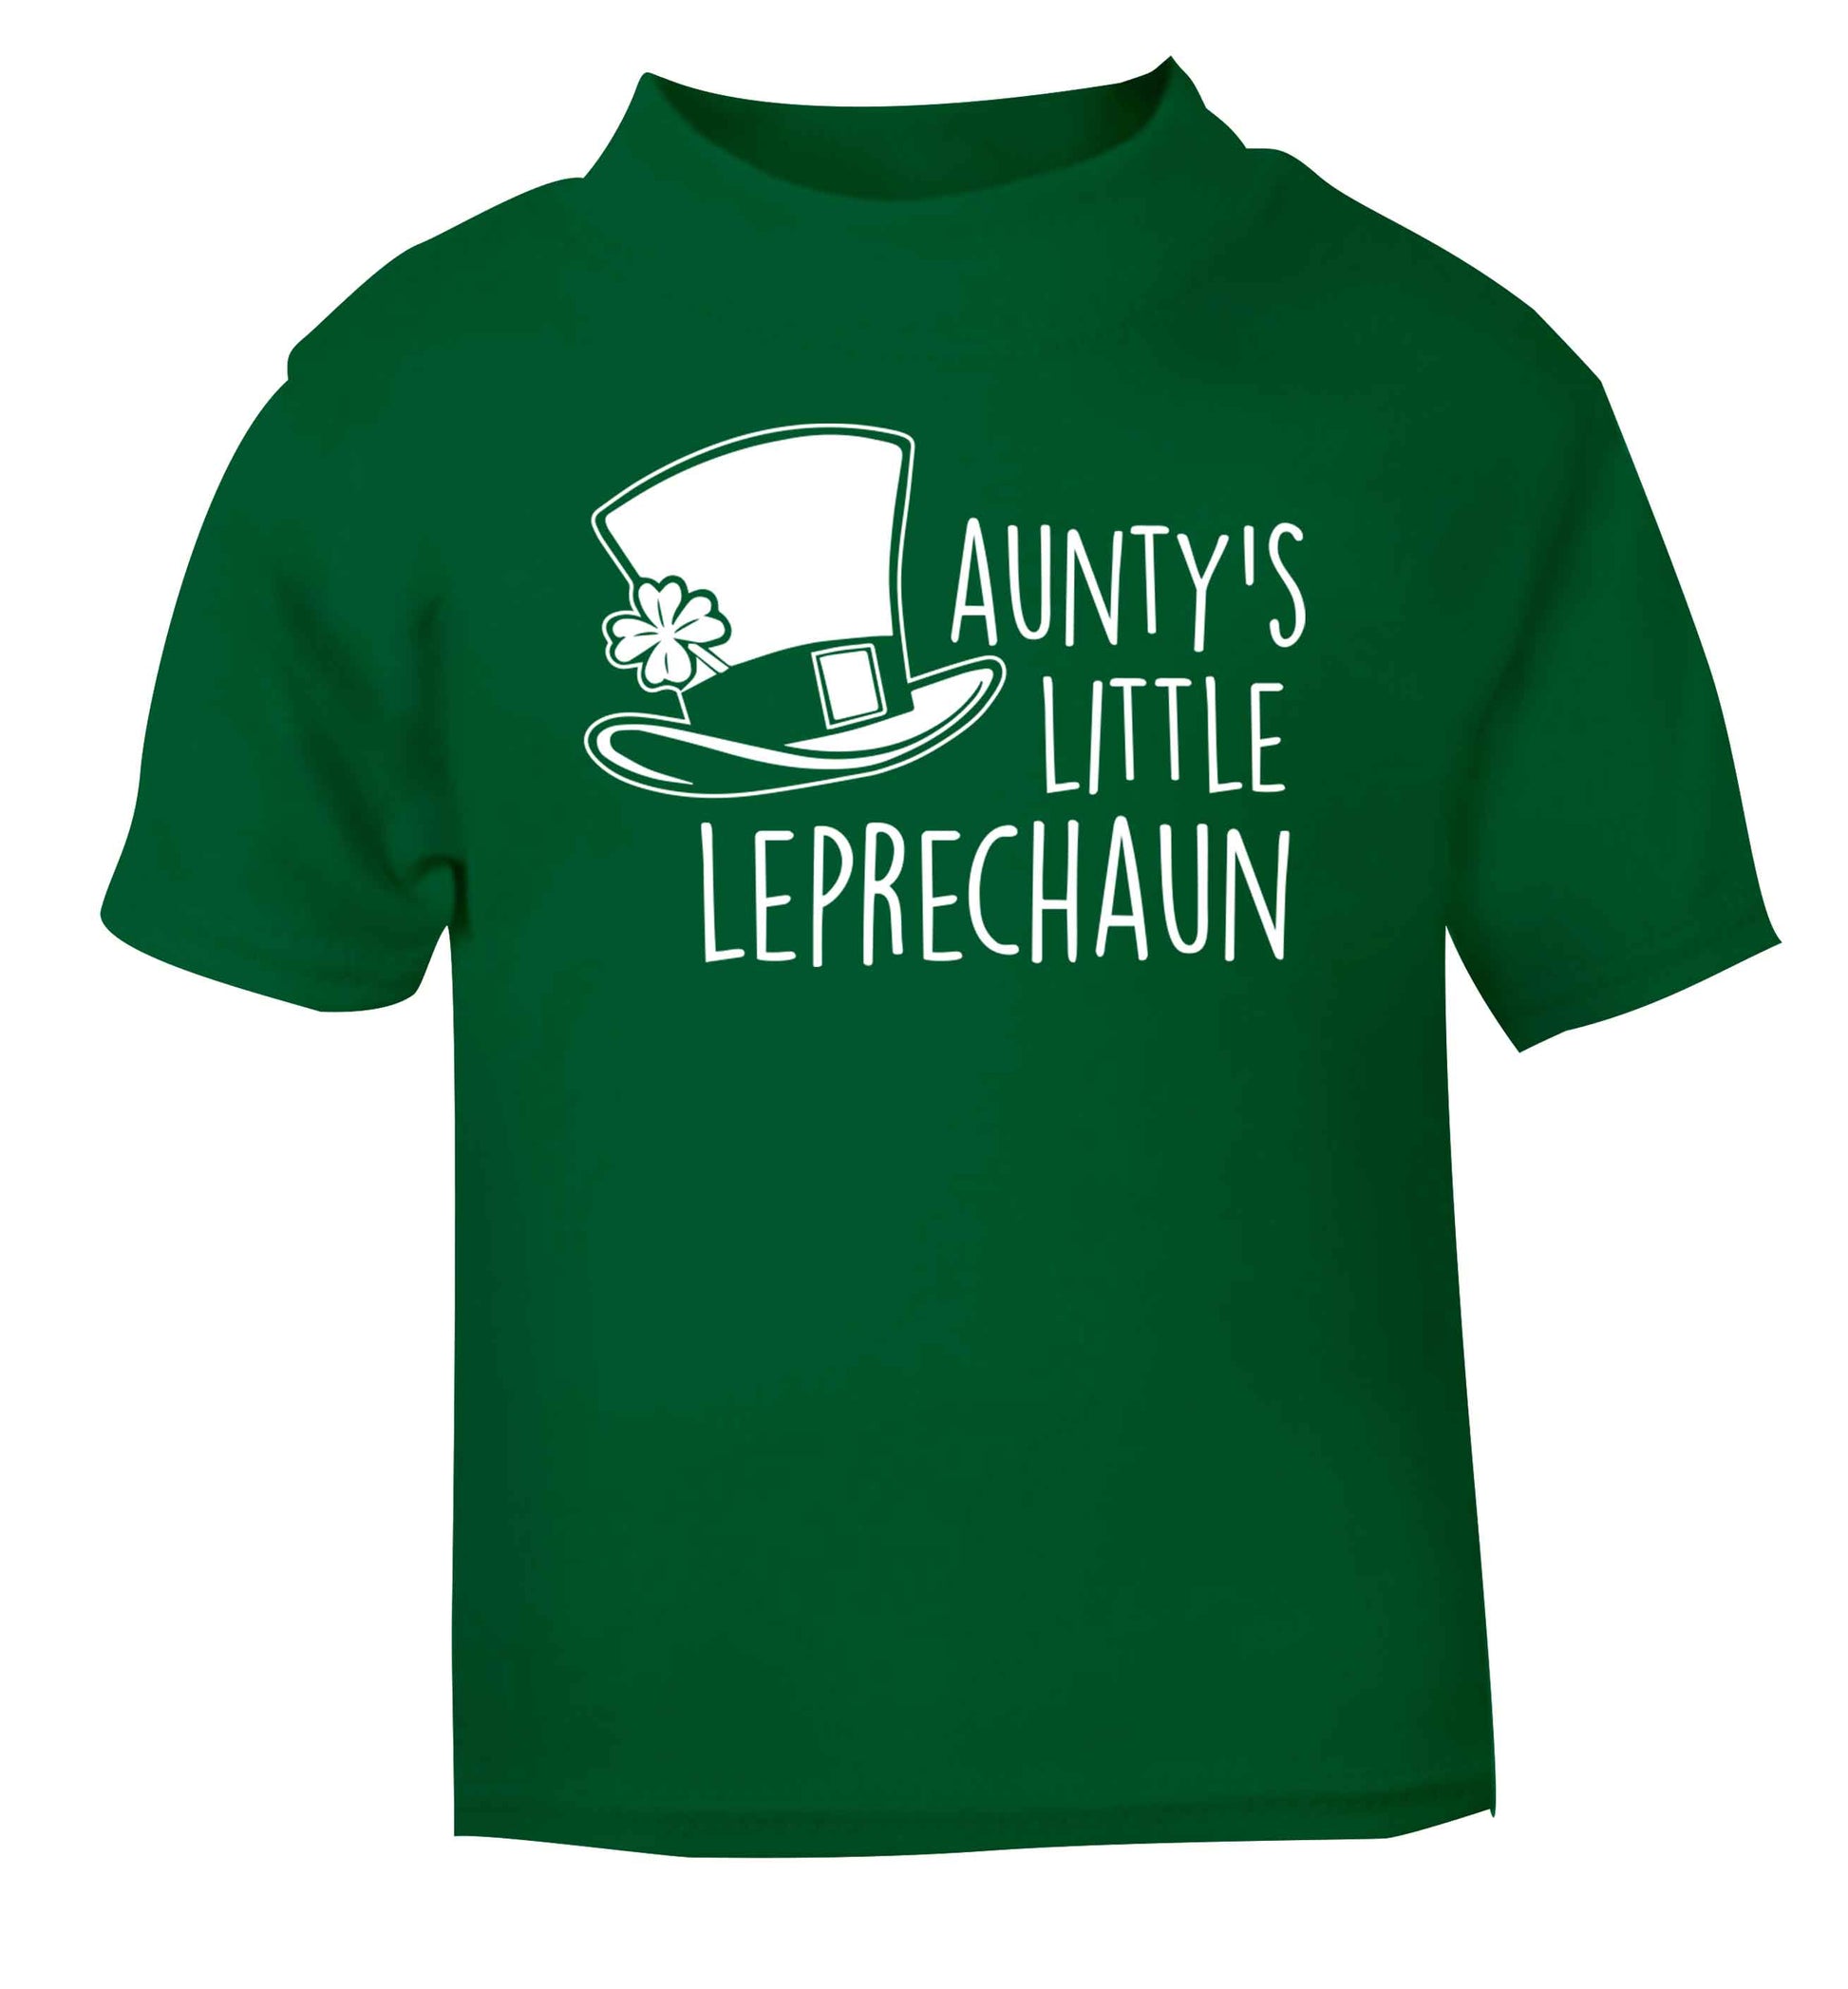 Aunty's little leprechaun green baby toddler Tshirt 2 Years